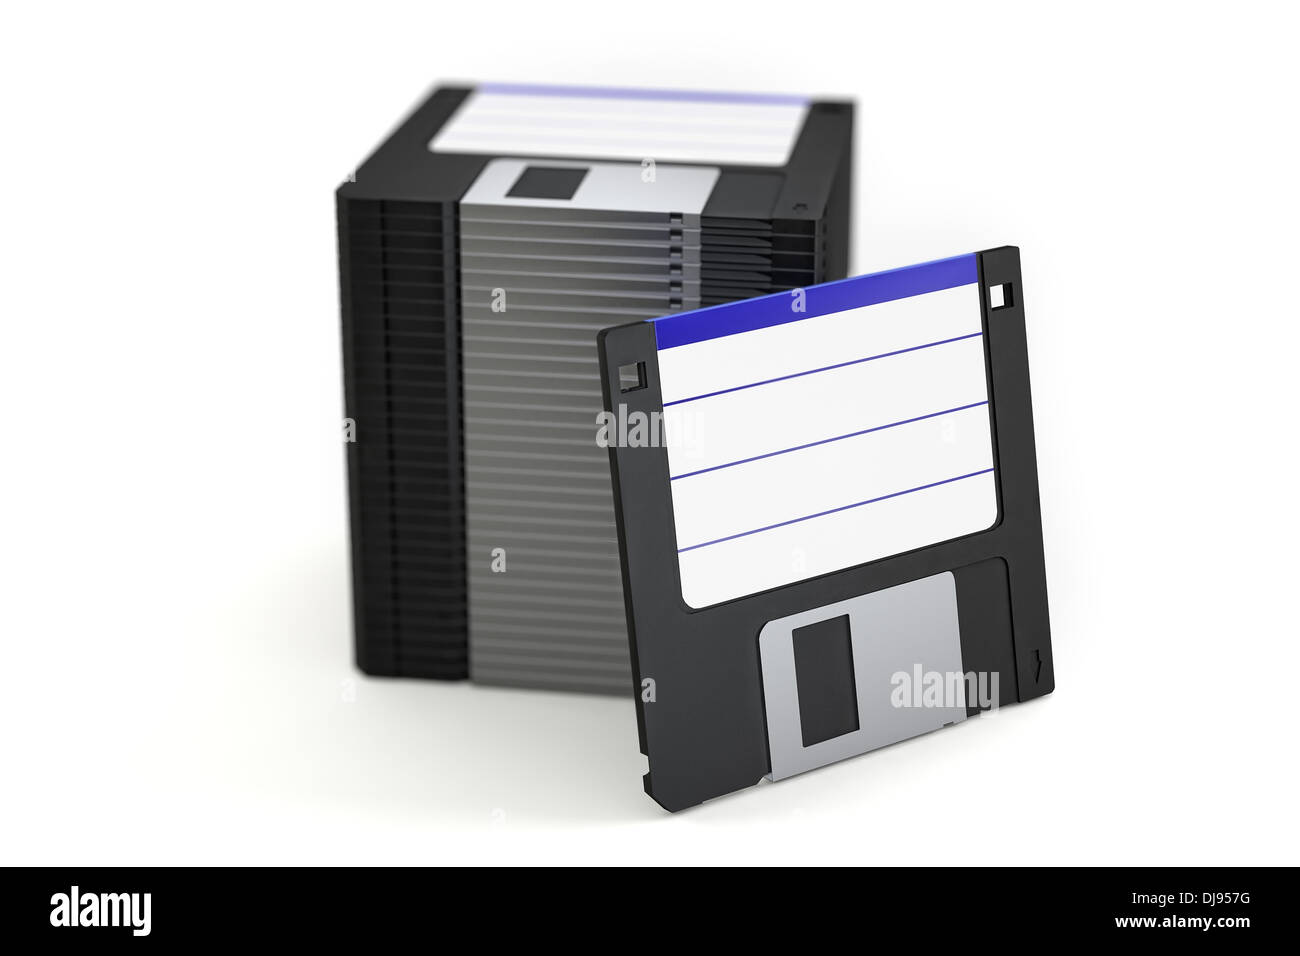 Stack of floppy disks isolated on white - 3D illustration Stock Photo